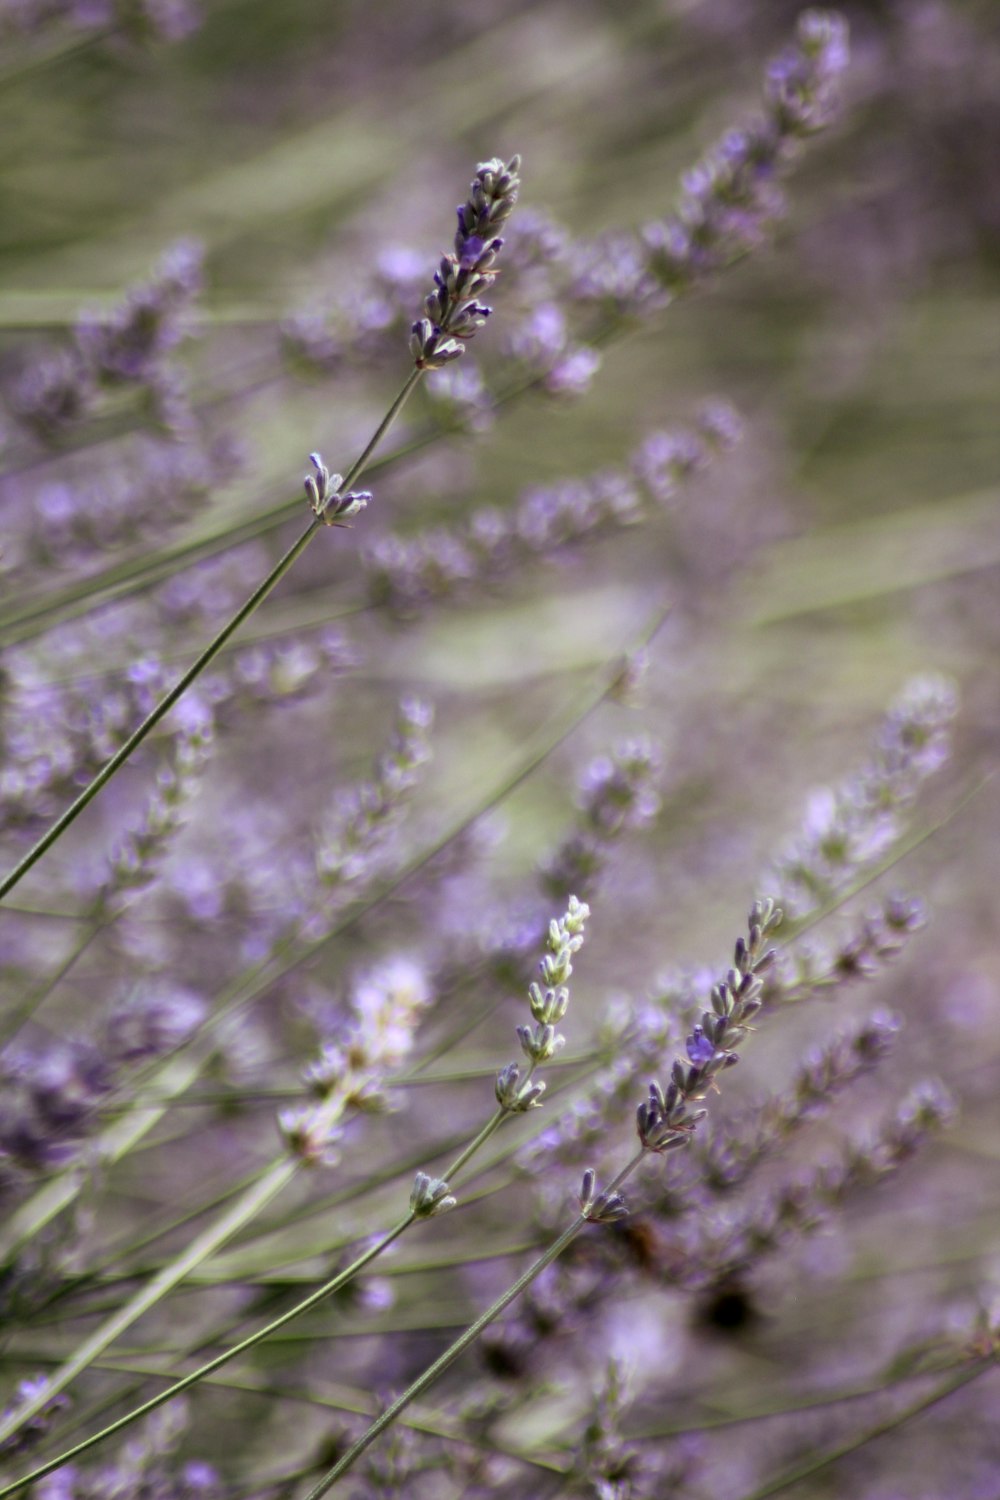 close-up photo of purple flowers